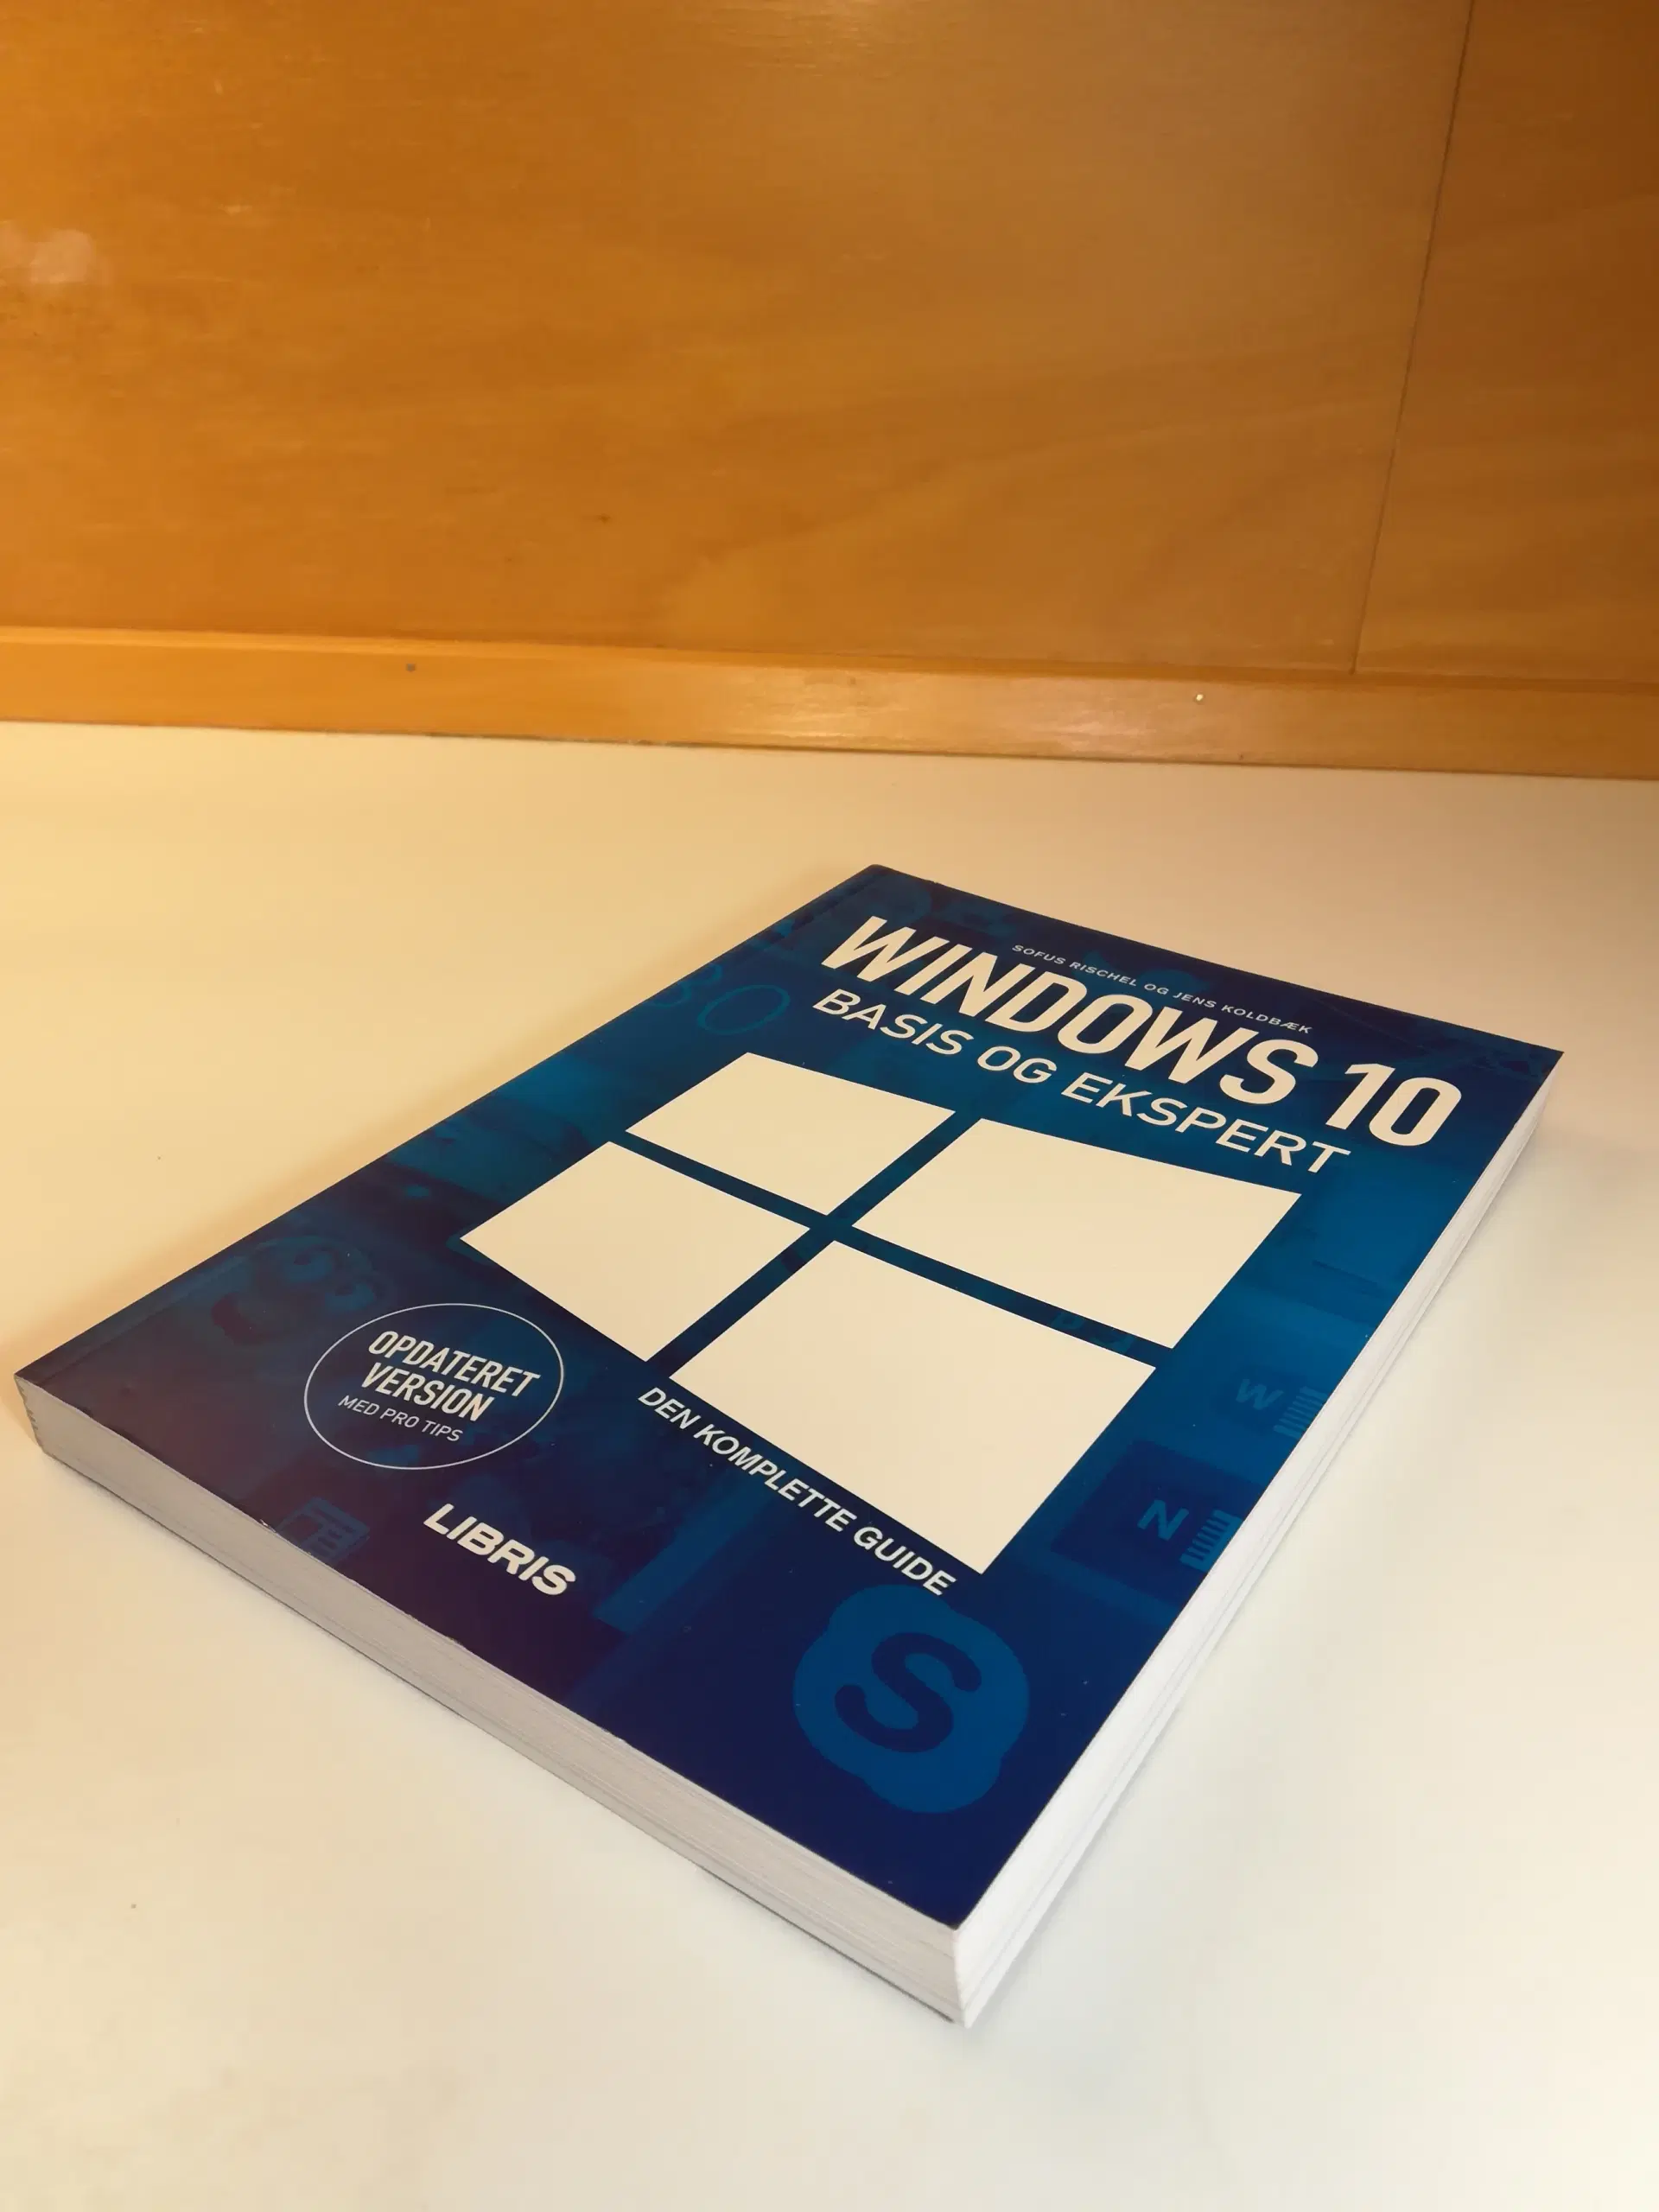 Windows 10 bogen - Basis og ekspert - bog 304 s